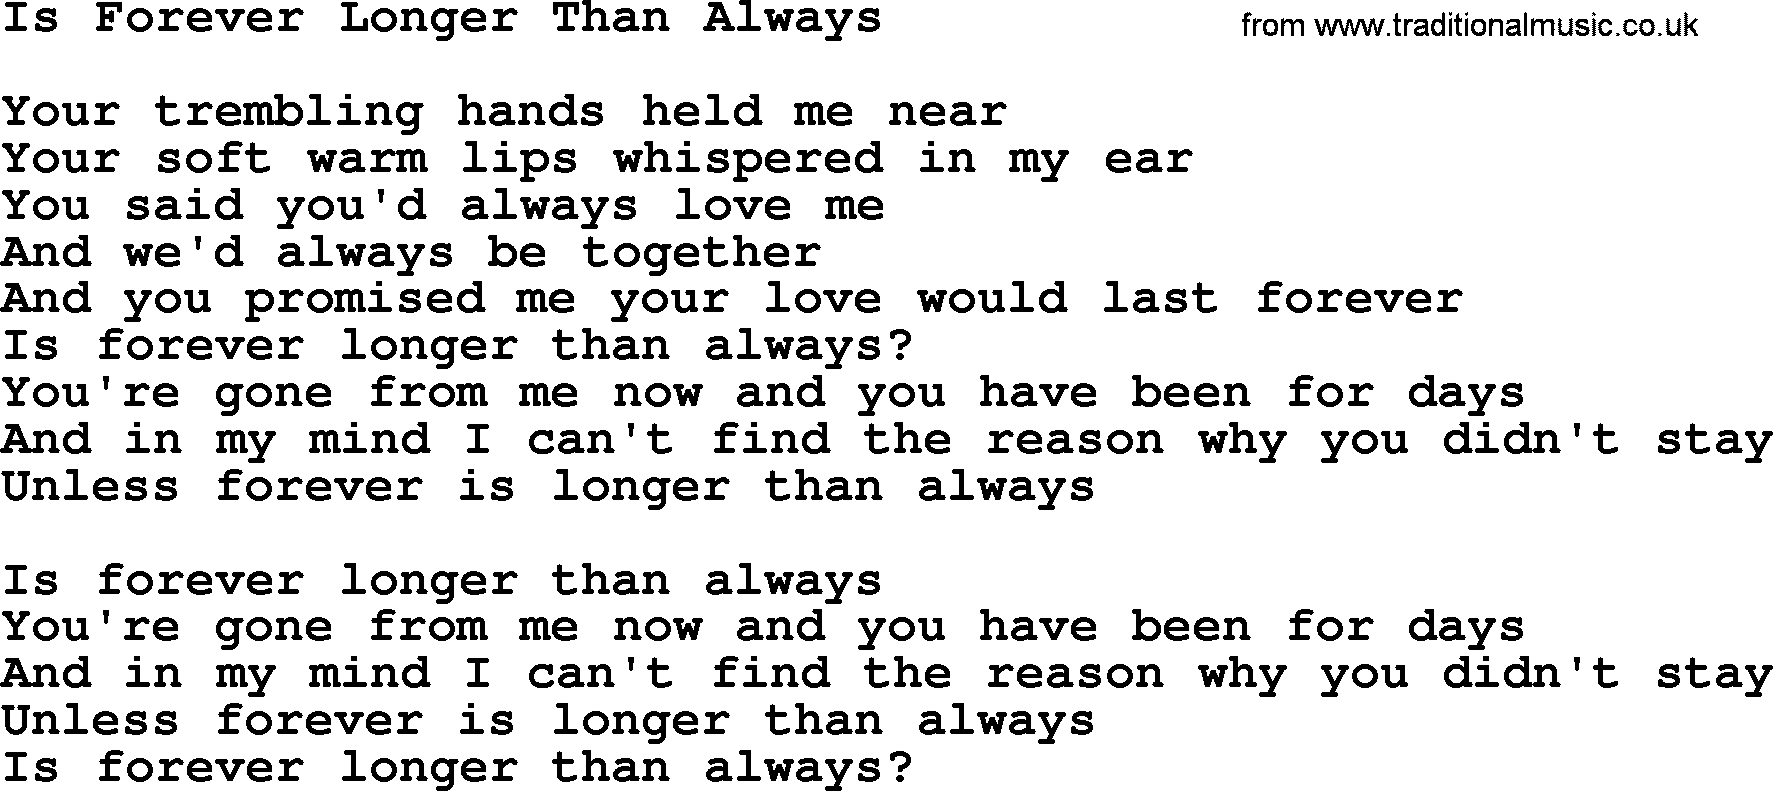 Dolly Parton song Is Forever Longer Than Always.txt lyrics